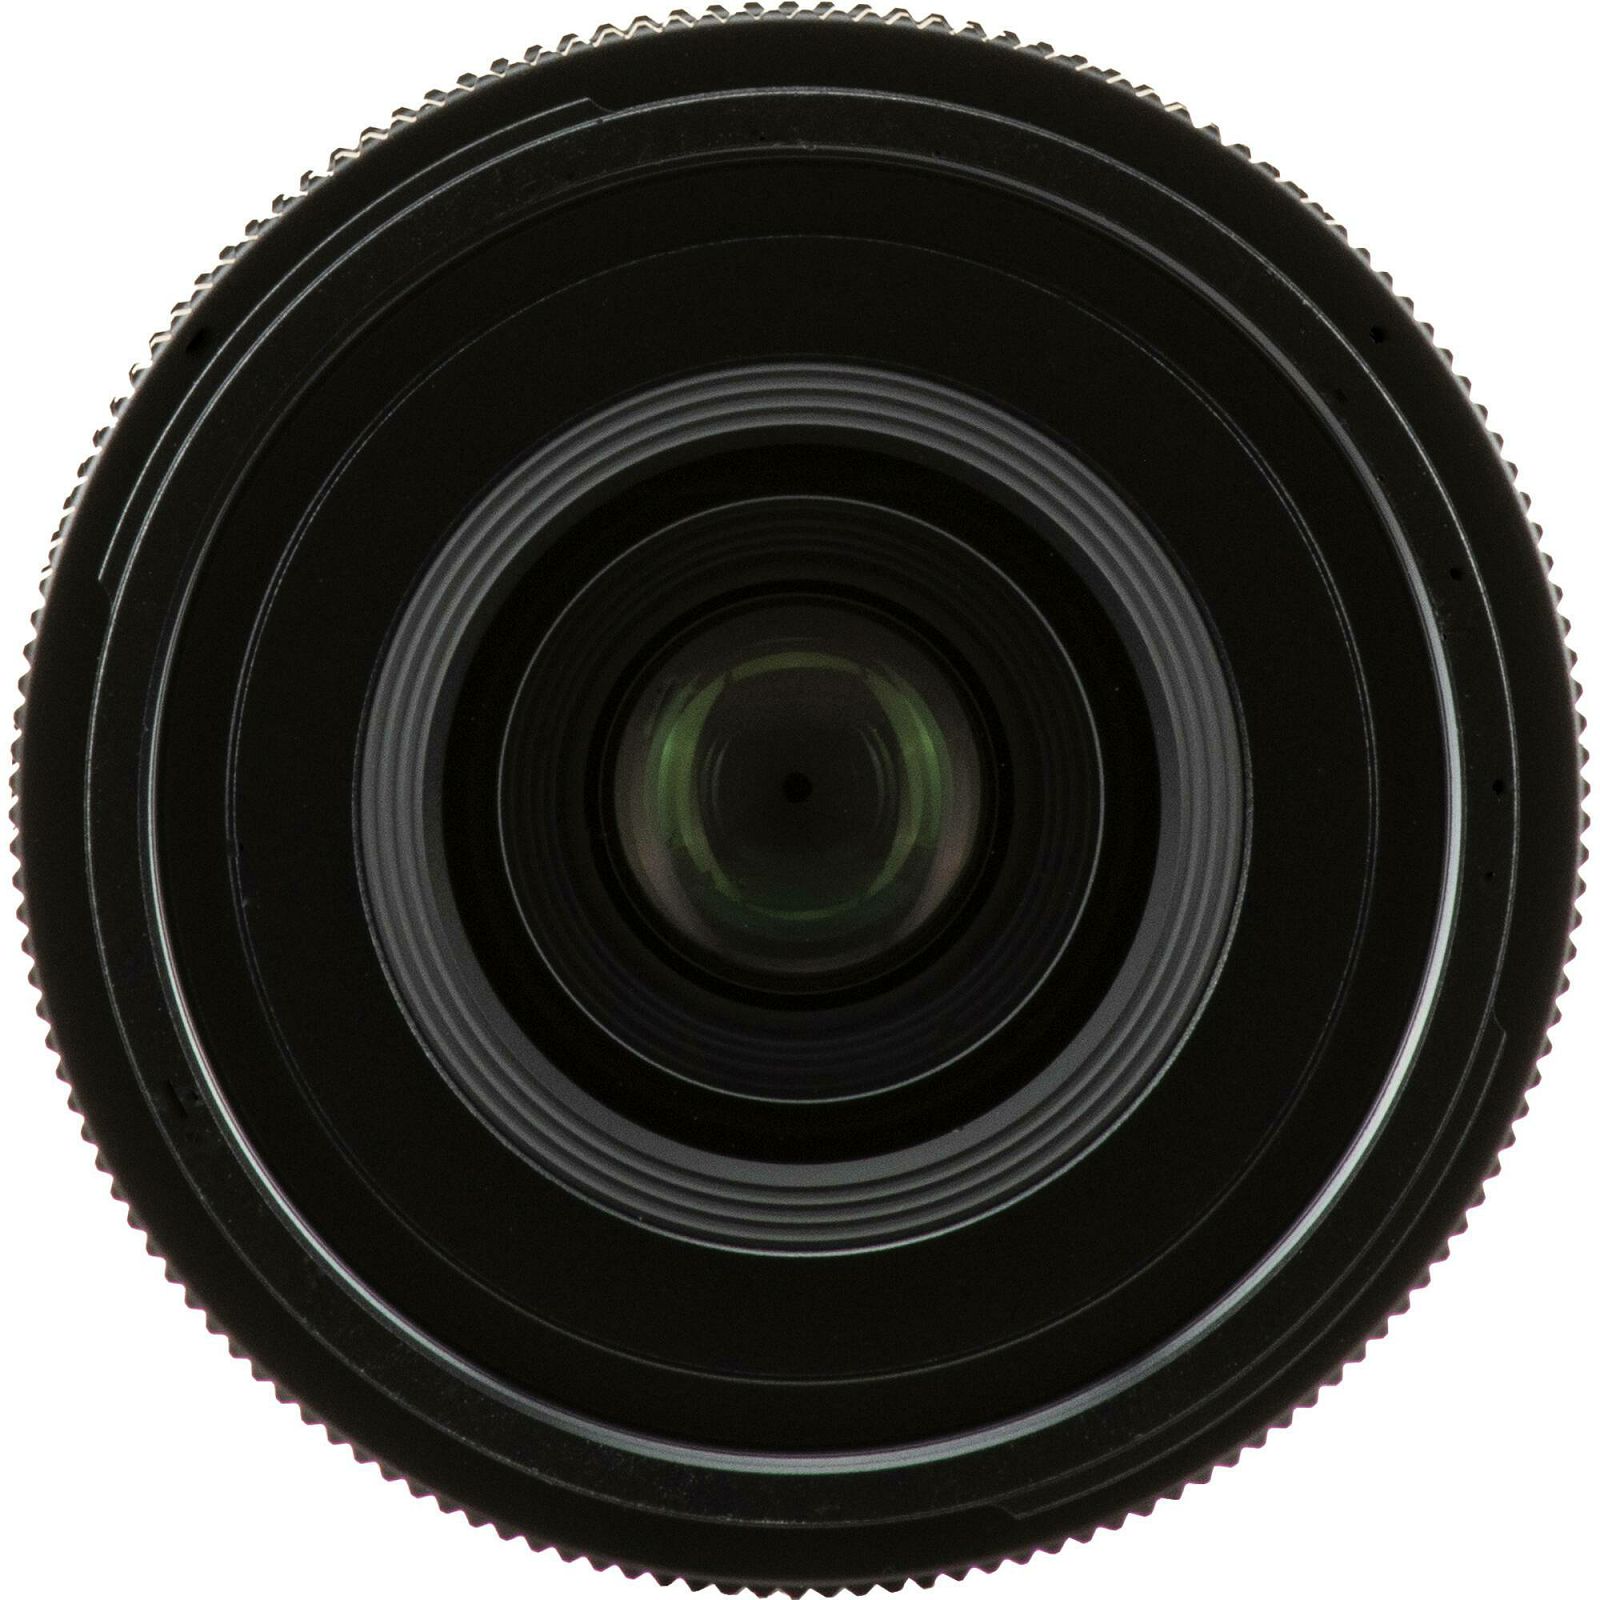 Sigma 35mm f/2 DG DN Contemporary objektiv za Panasonic Leica L-mount